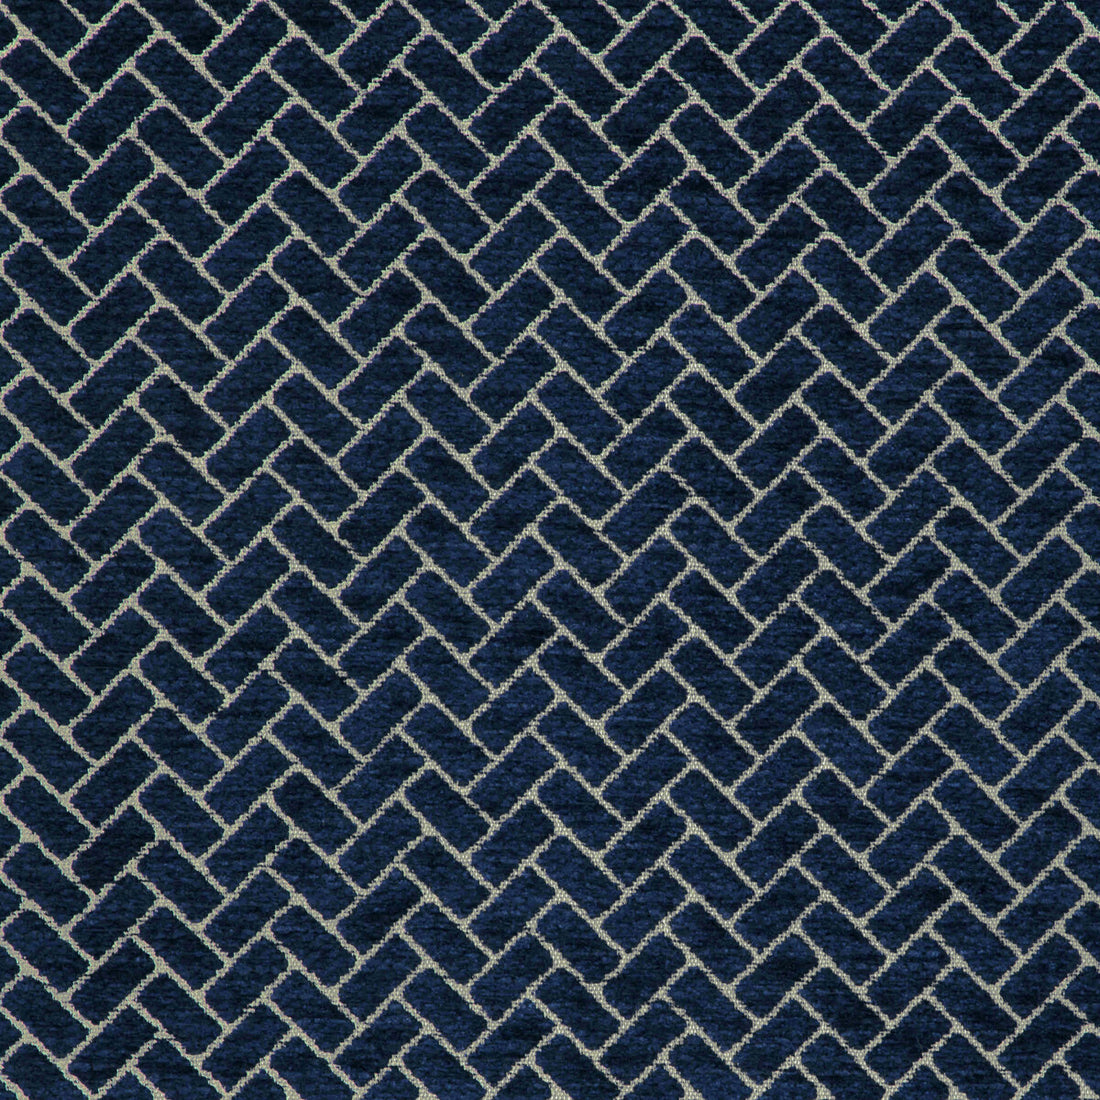 Kravet Smart fabric in 37003-50 color - pattern 37003.50.0 - by Kravet Smart in the Pavilion collection